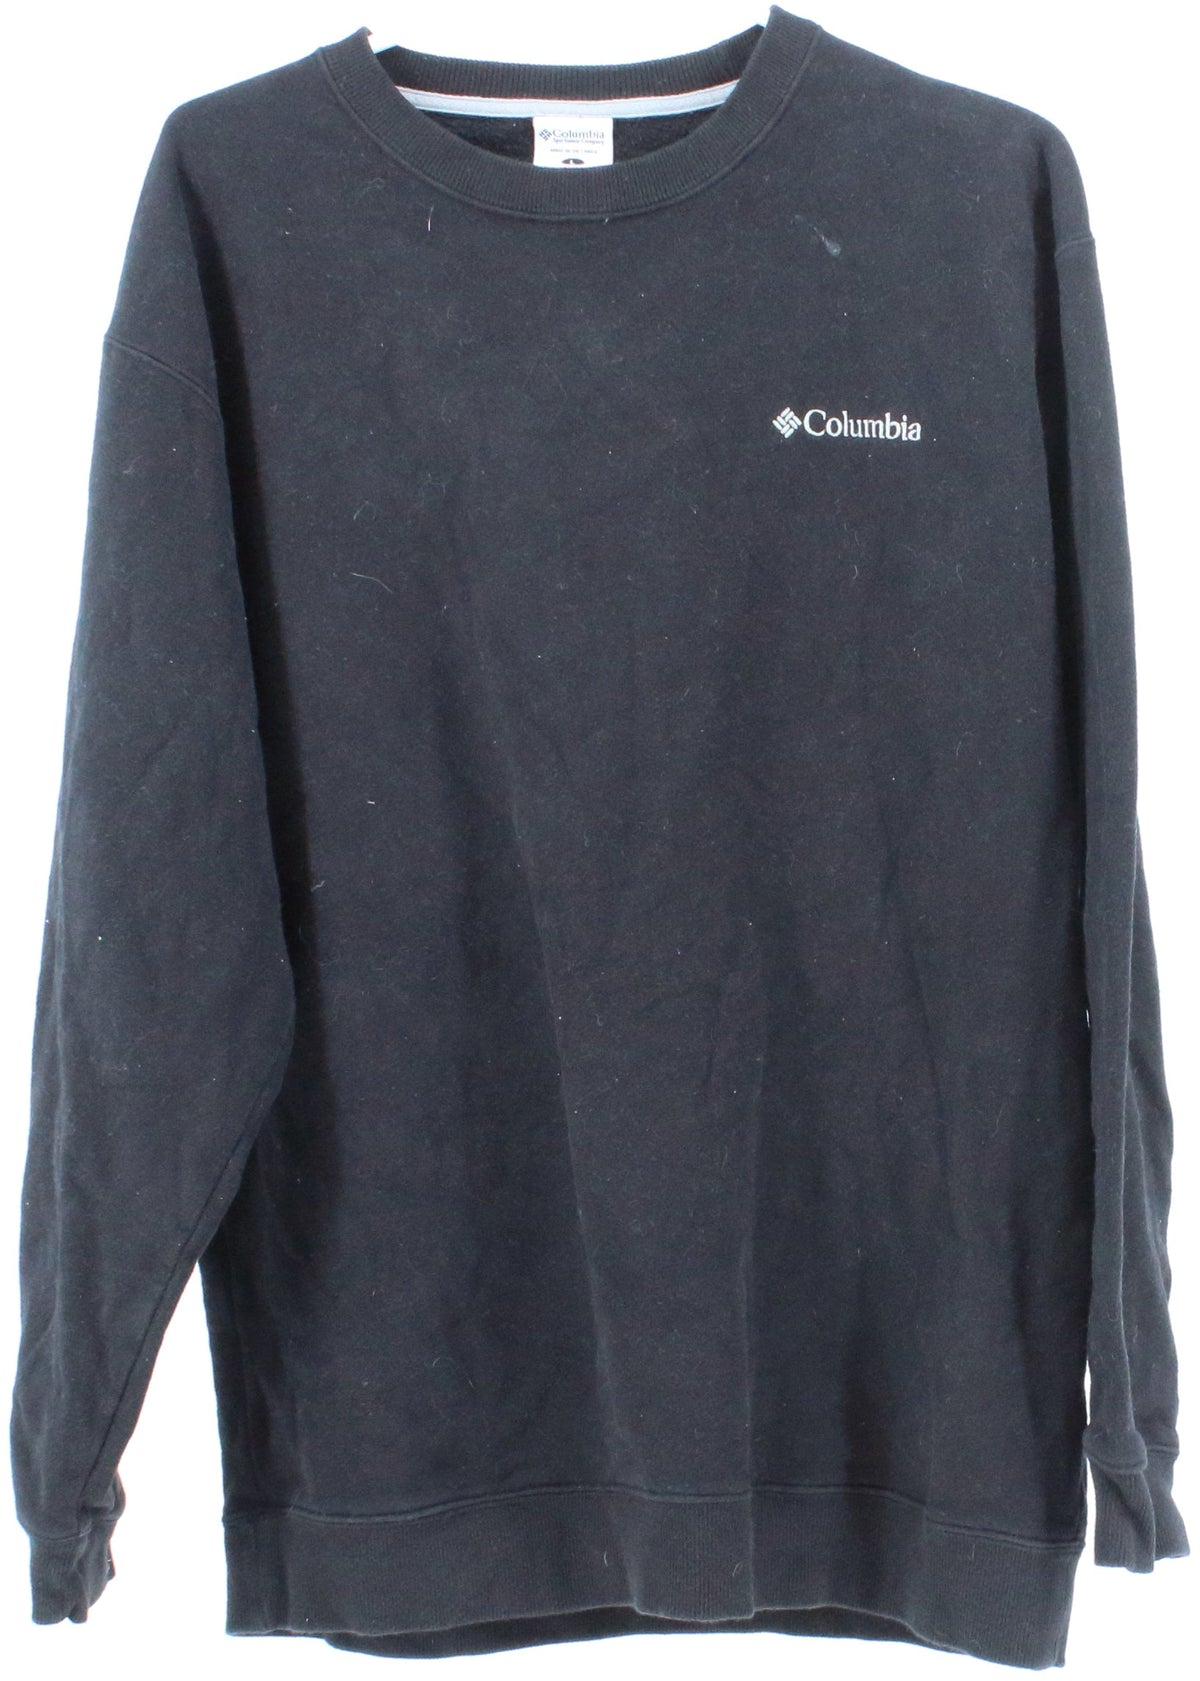 Columbia Sportswear Company Black Crew Neck Sweatshirt